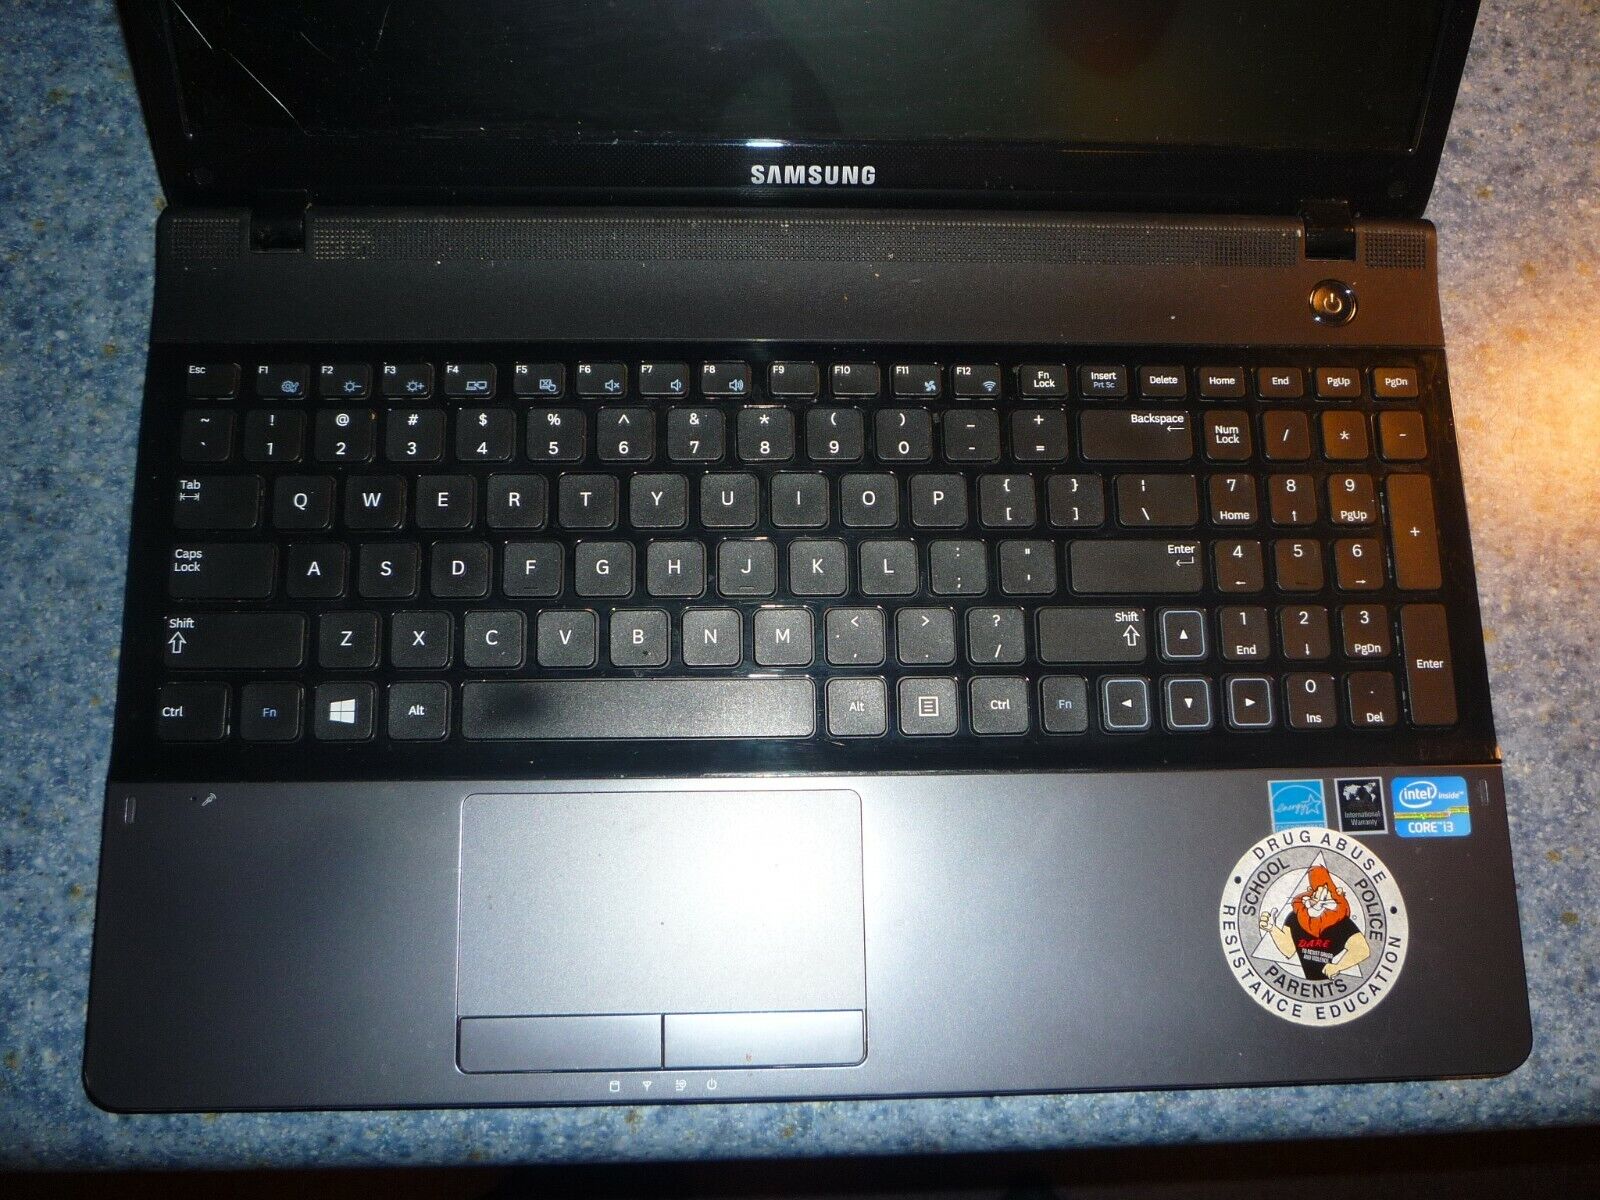 Samsung Laptop Computer NP300E5C-A07US Intel Core i3-2370M dual-core processor 